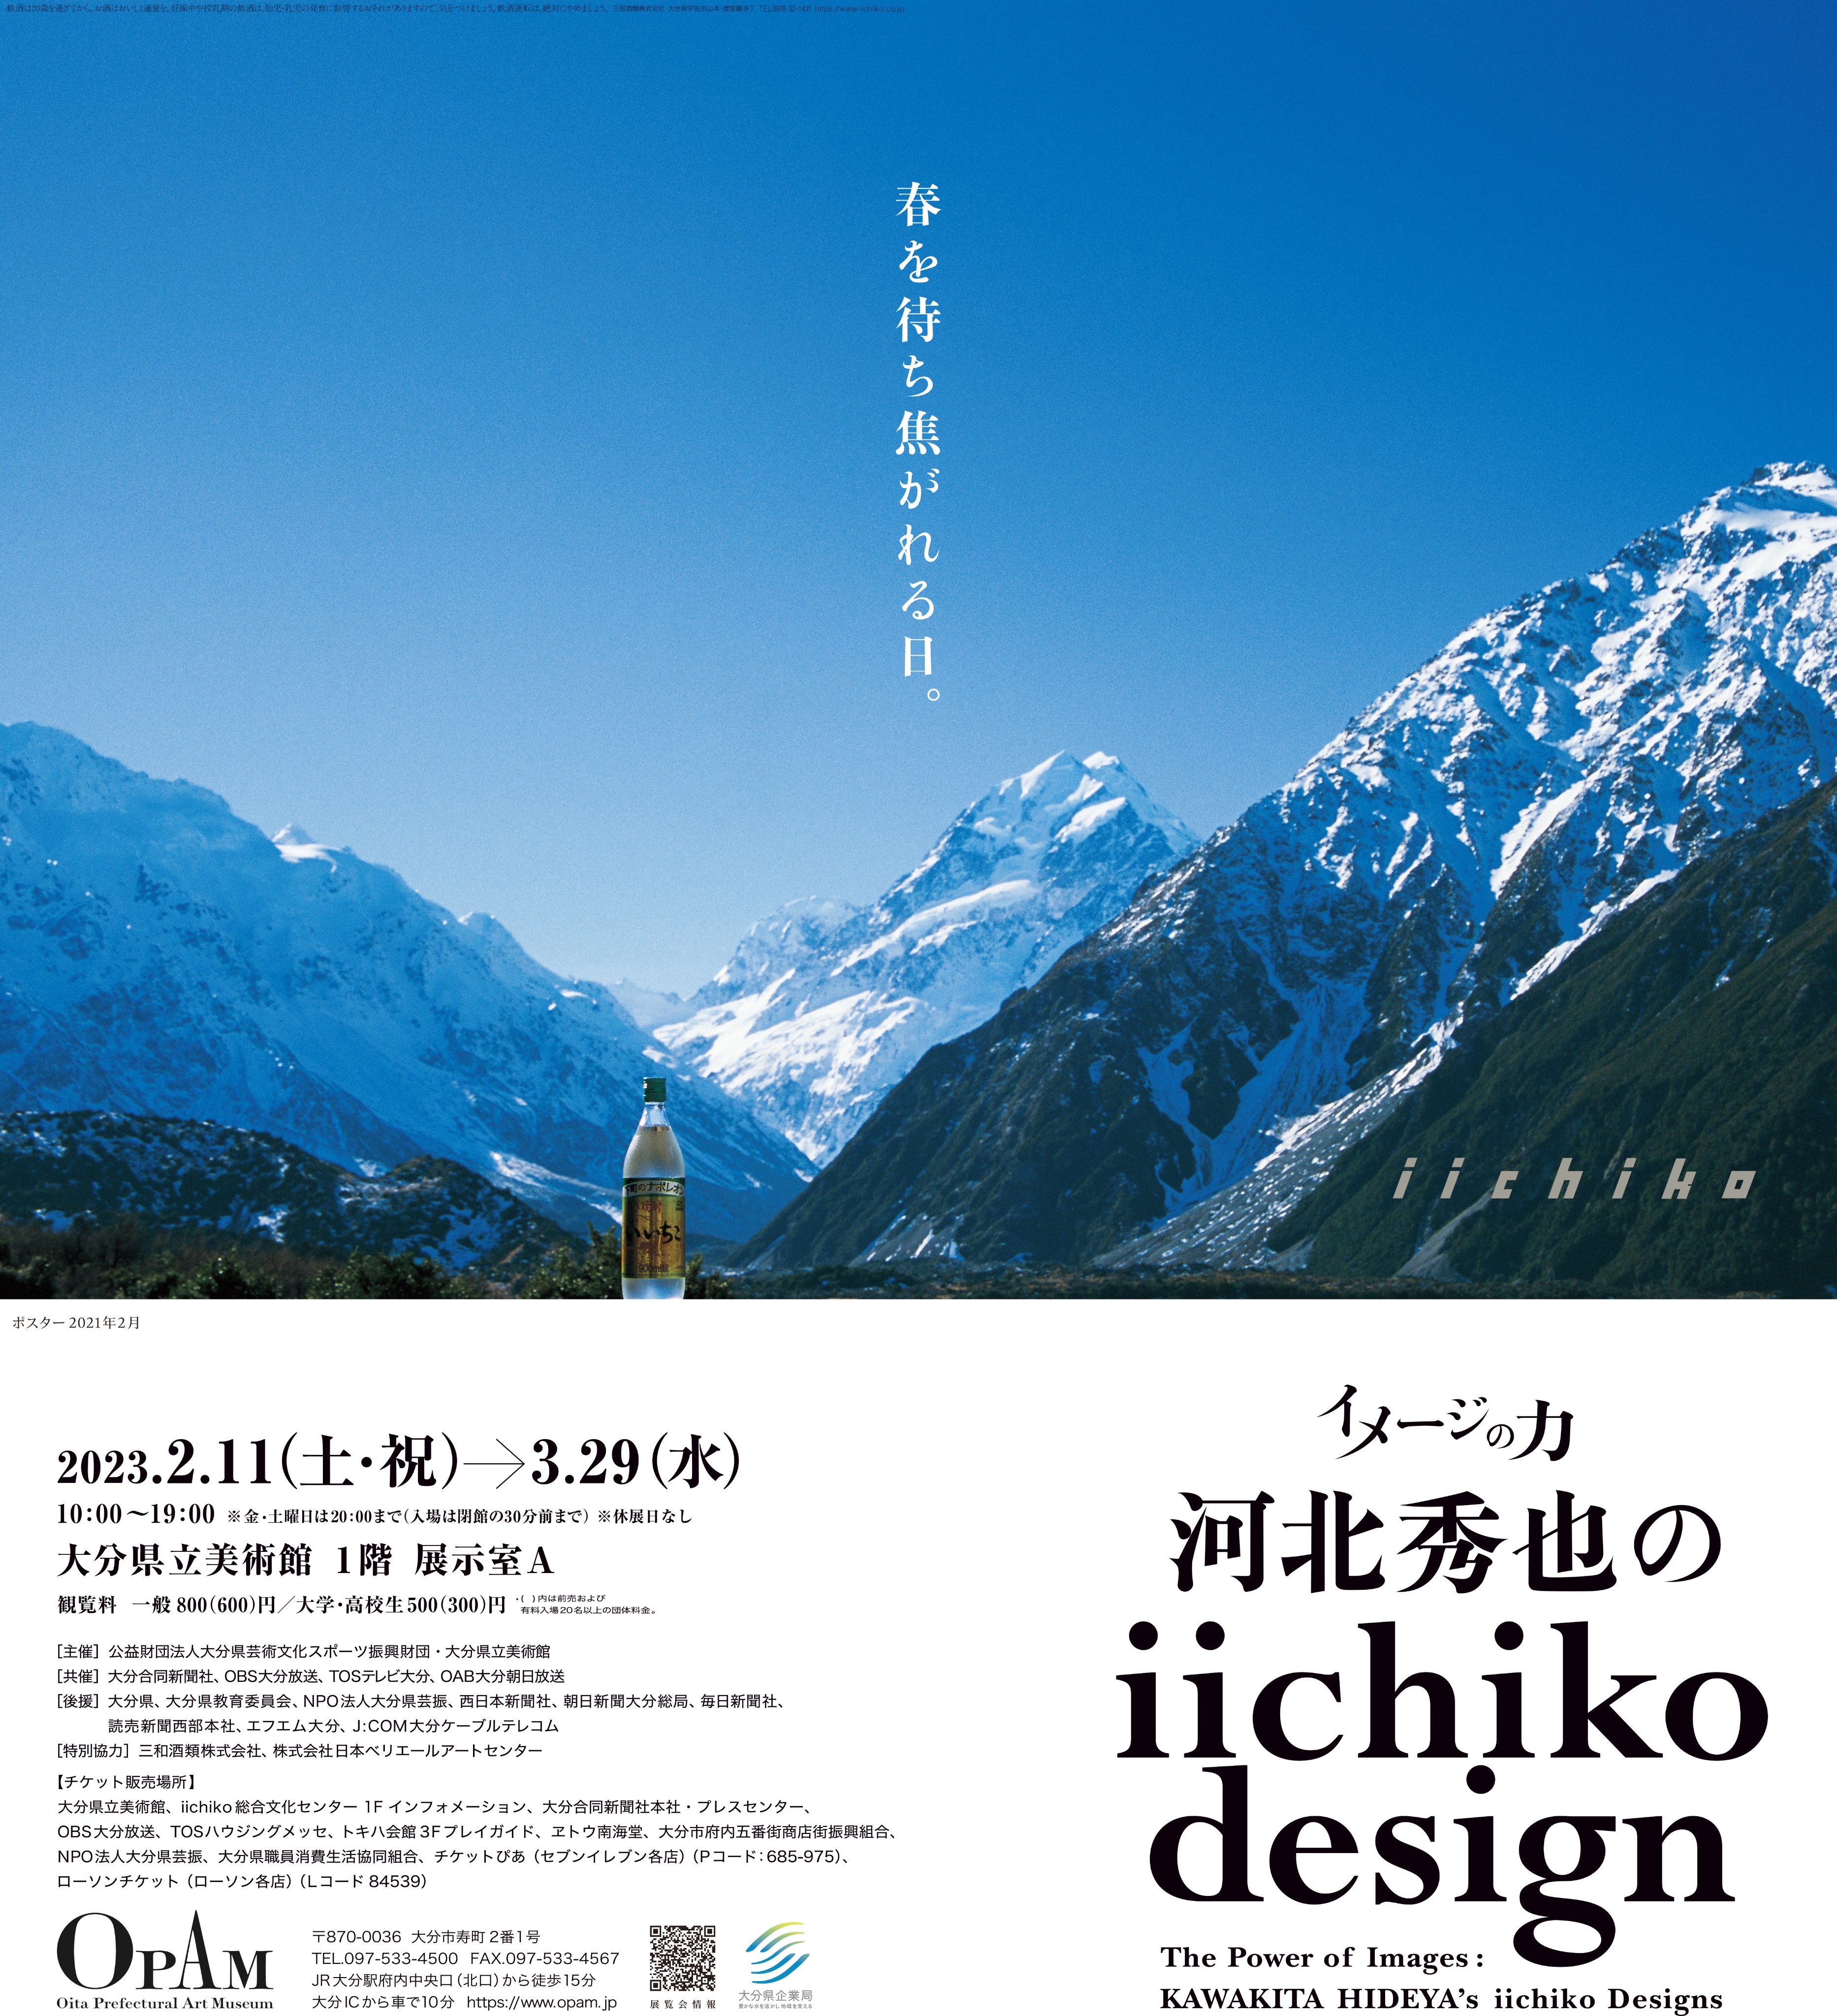 The Power of Images: Hideya Kawakita's Iichiko Designs （Oita